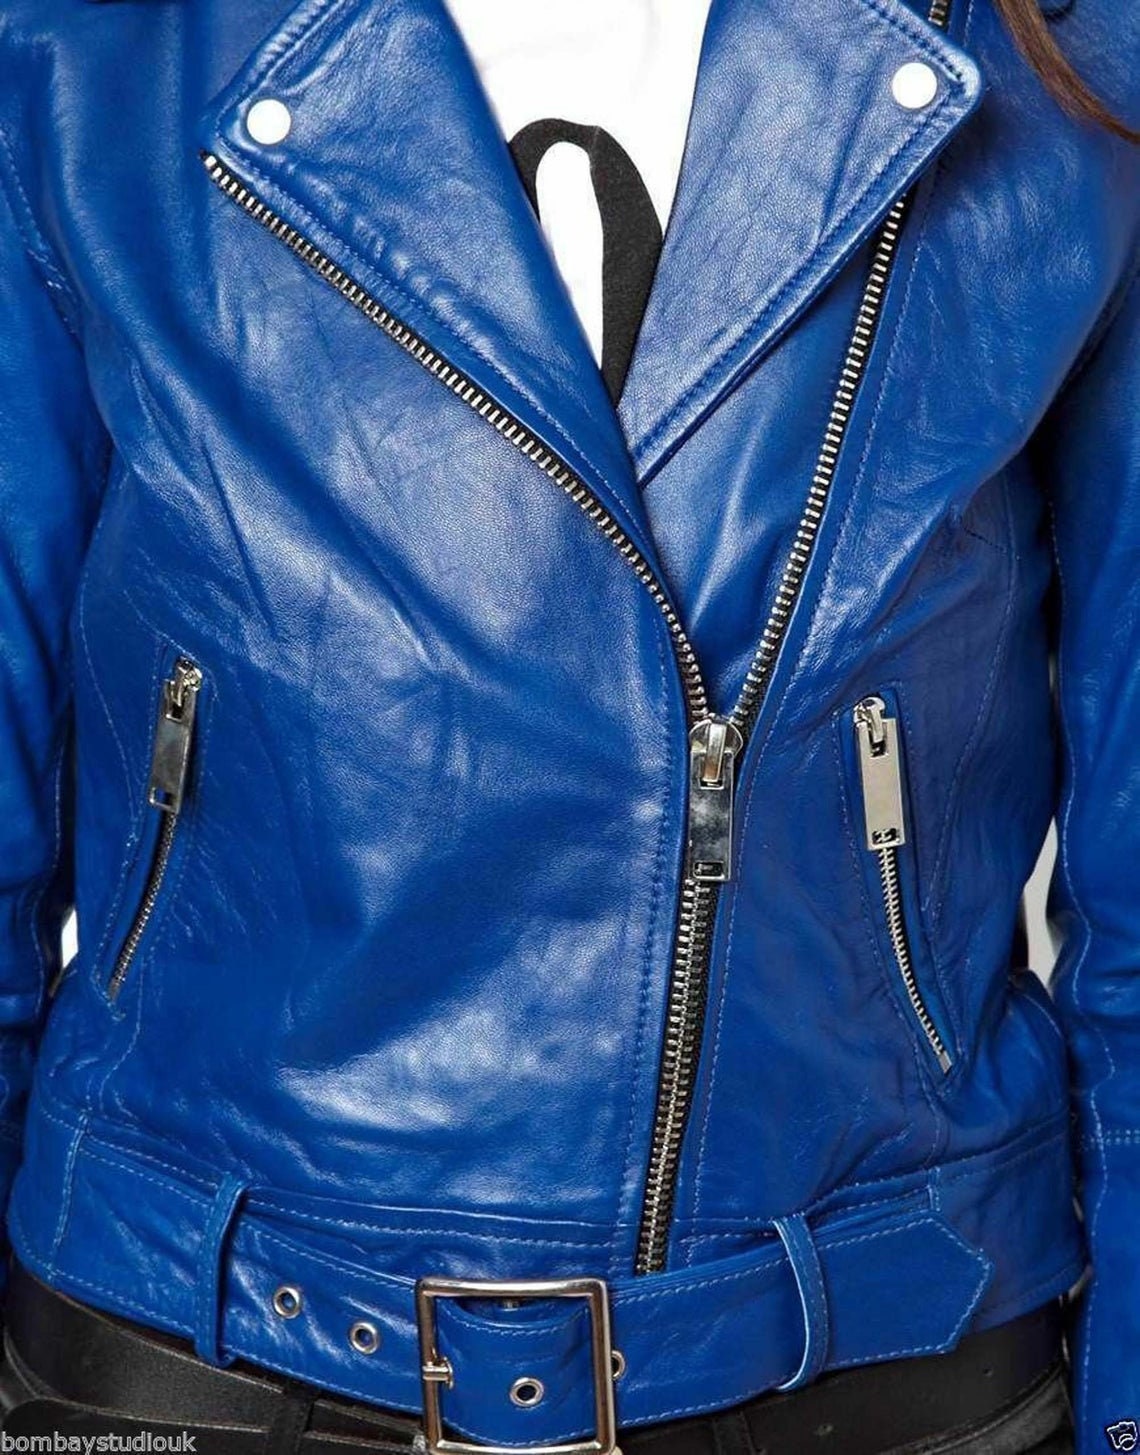 LINDSEY STREET Women's Lambskin Leather Ladies Jacket Biker Motorcycle Slim Fit Blue Jacket for Girls Gift for Her Birthday Gift